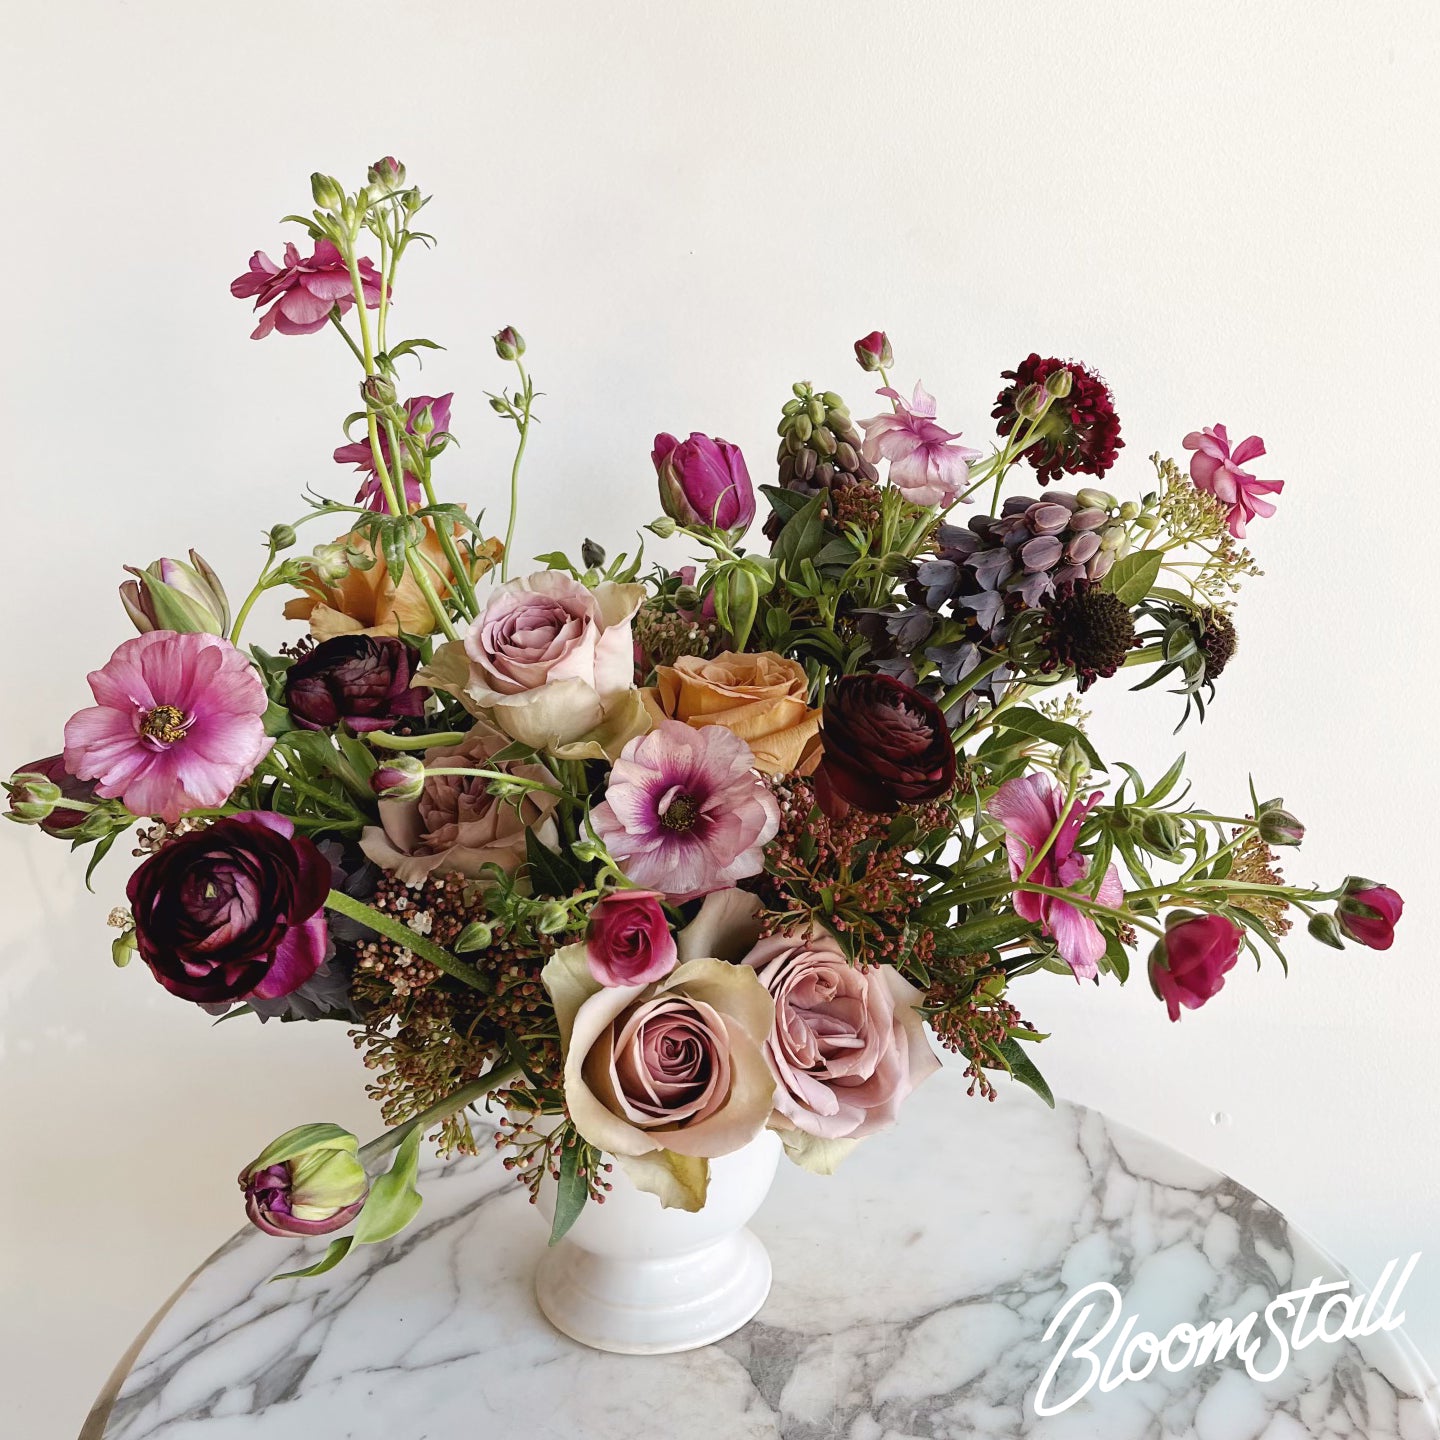 Funeral Flower Arrangements - Sympathy Flowers In Gresham